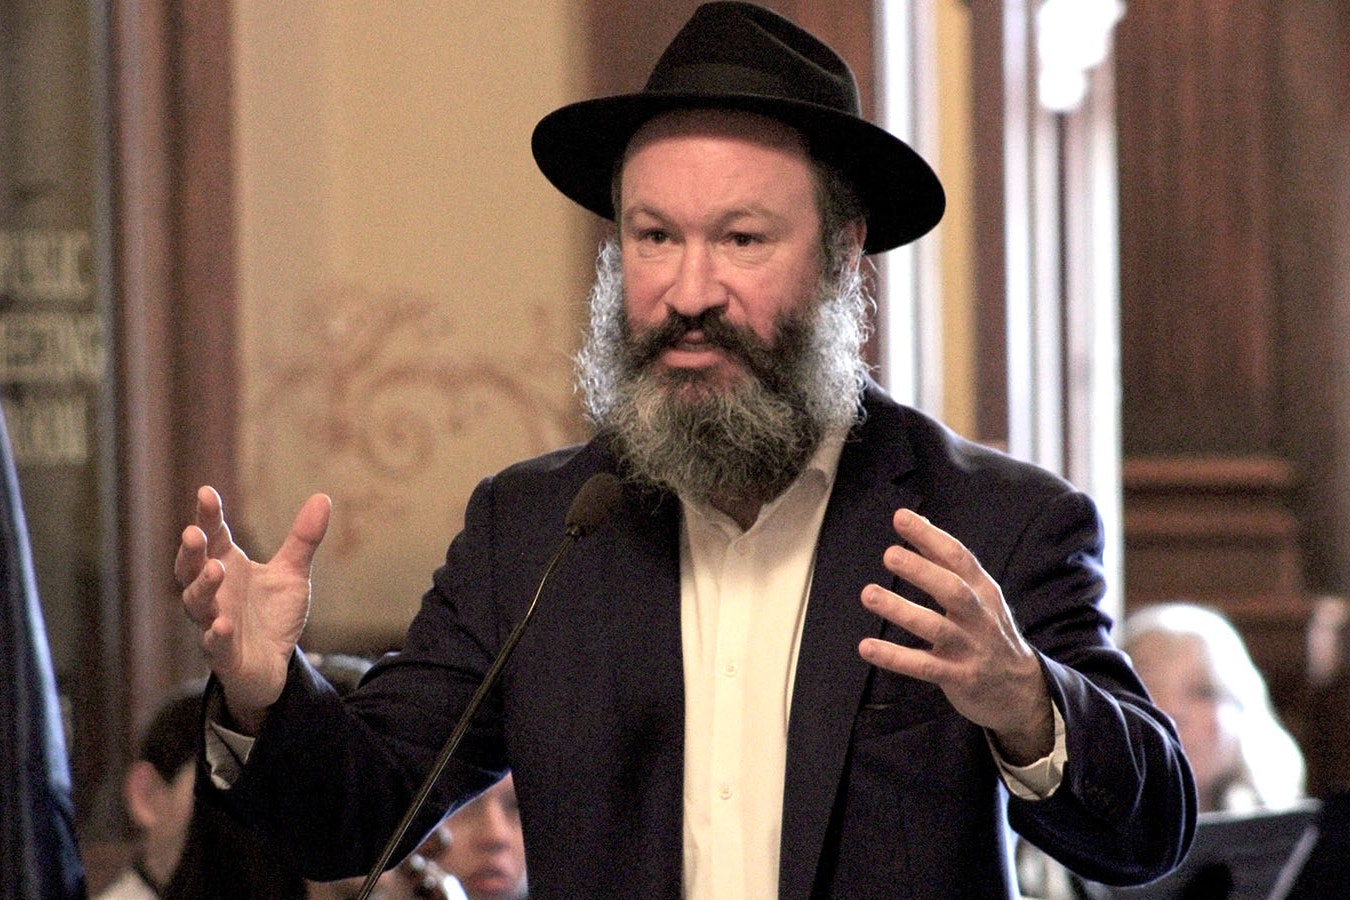 Rabbi Zalman Mendelsohn of the Chabad Jewish Center of Jackson at Monday's Chanukah ceremony at the Wyoming Capitol in Cheyenne.